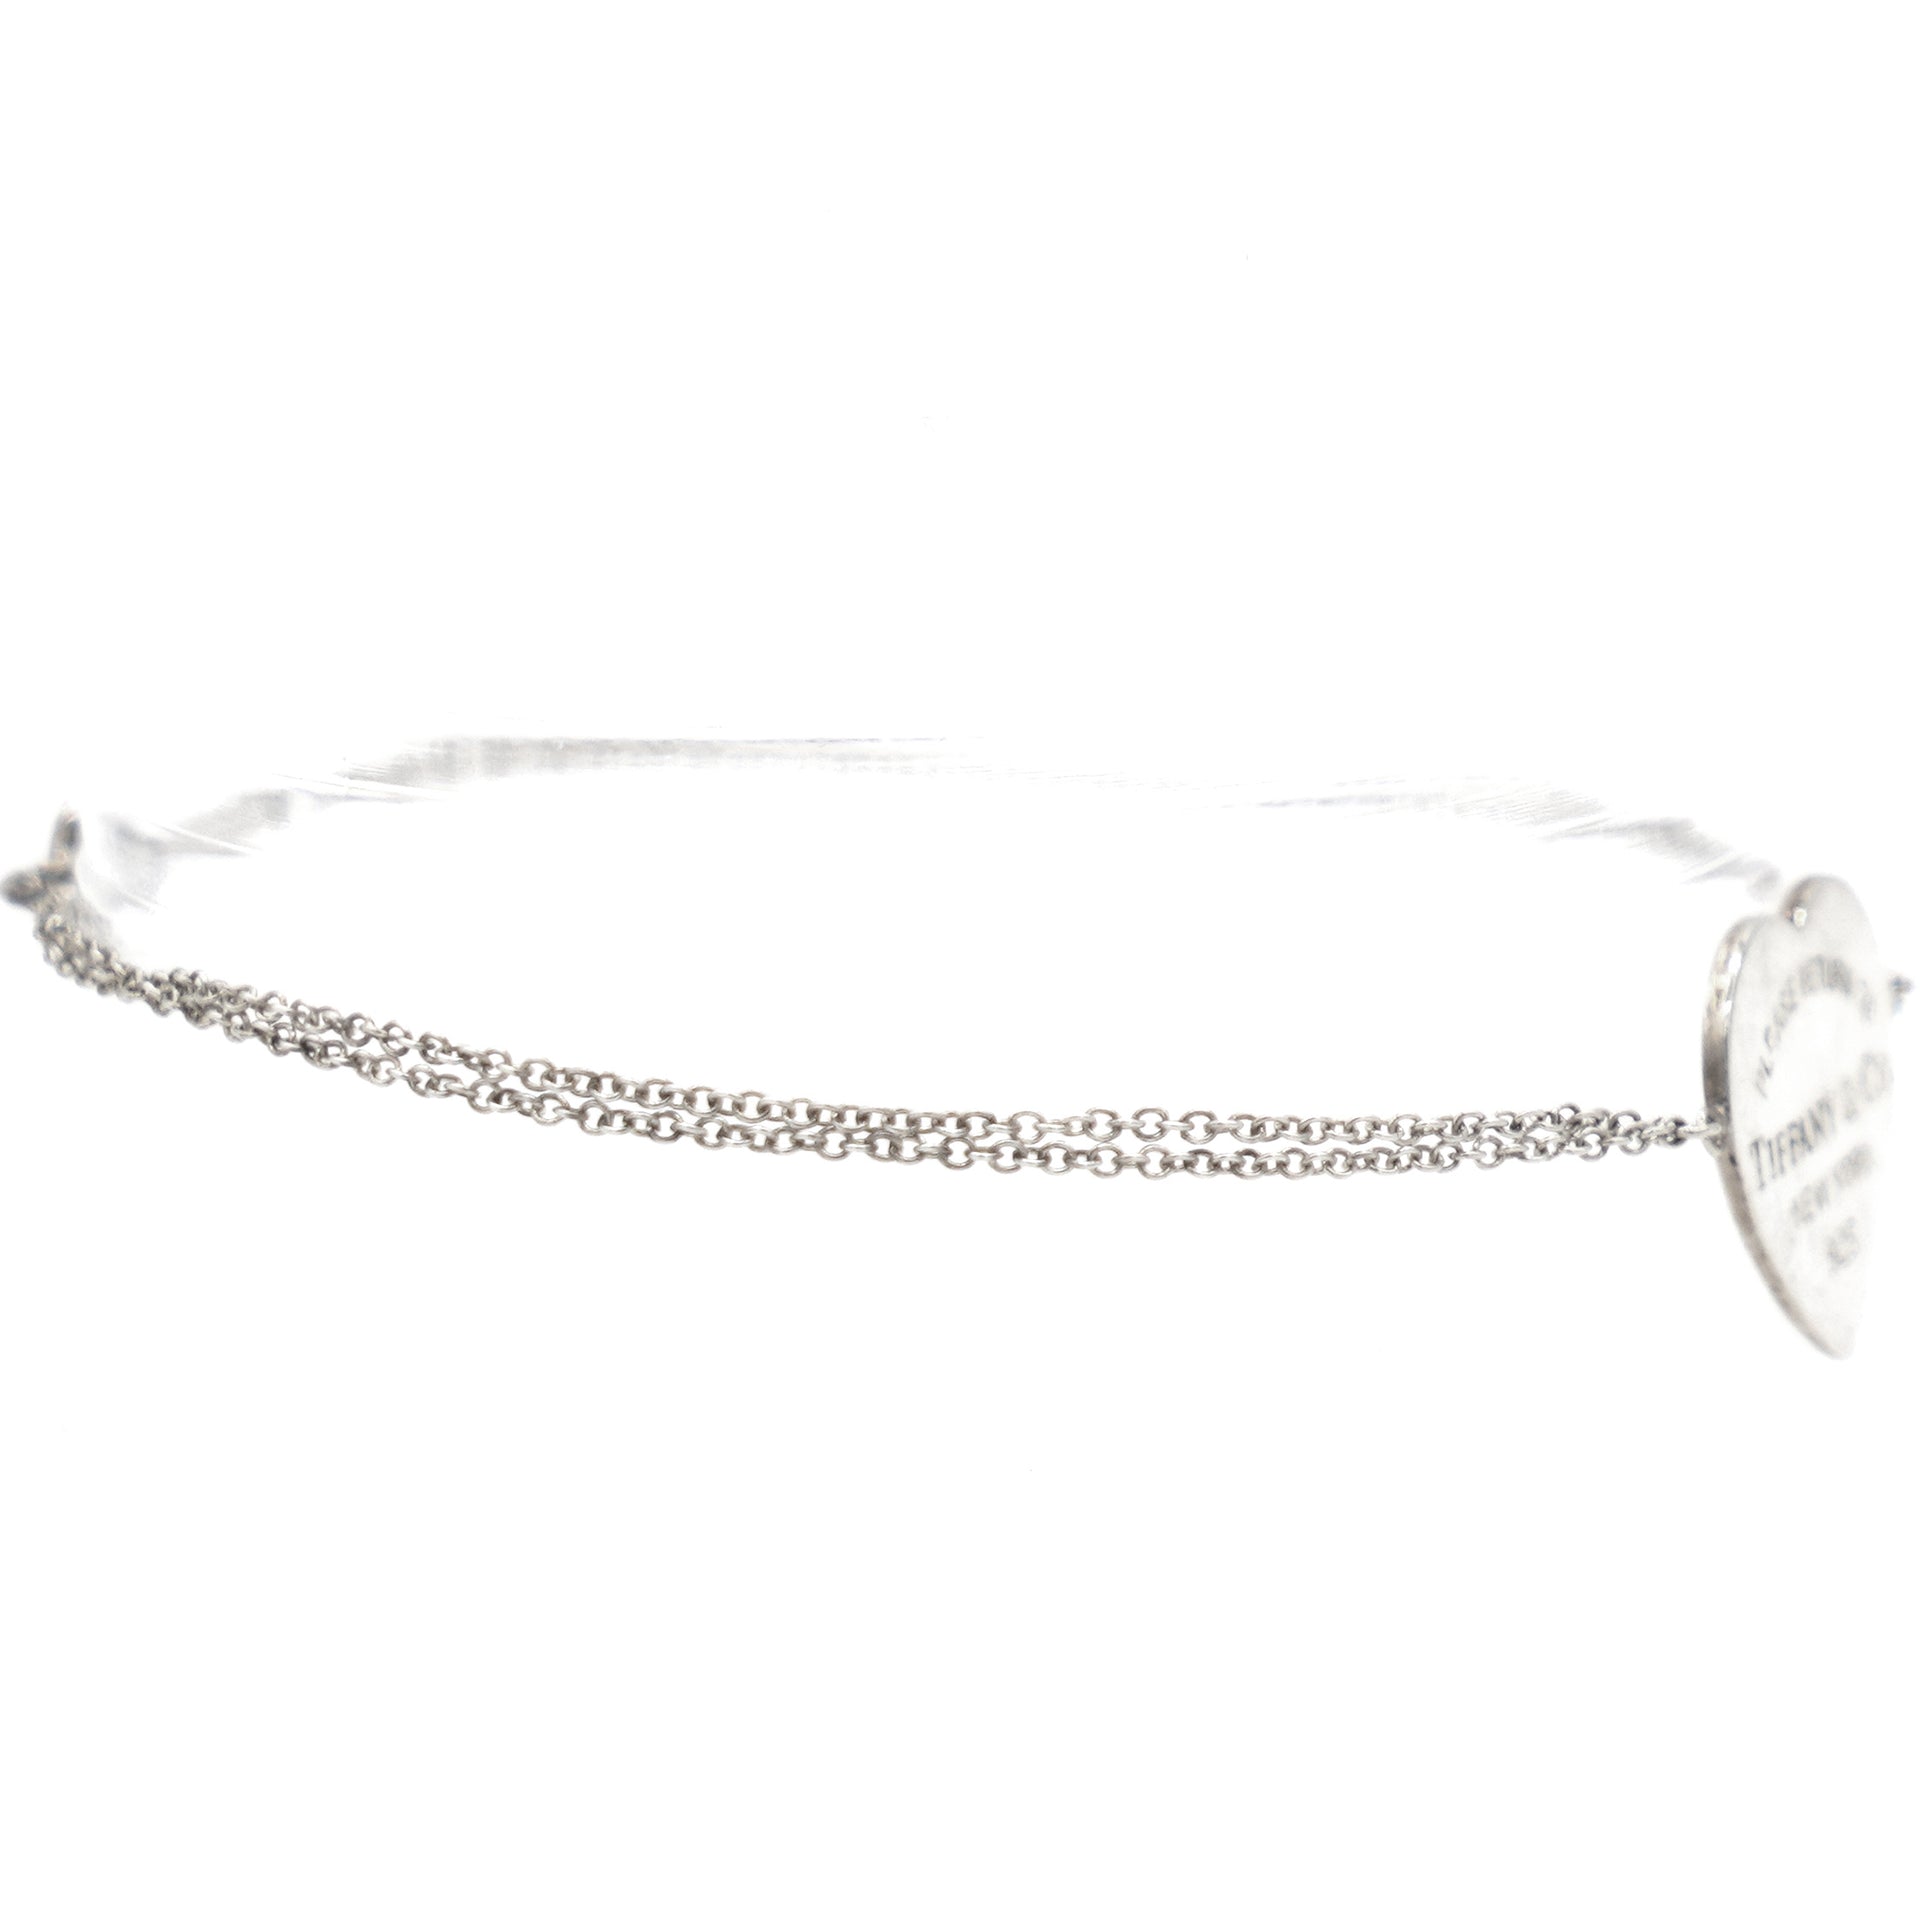 Return to Tiffany Jumbo Heart Tag Bracelet Extra Large Charm 8.75